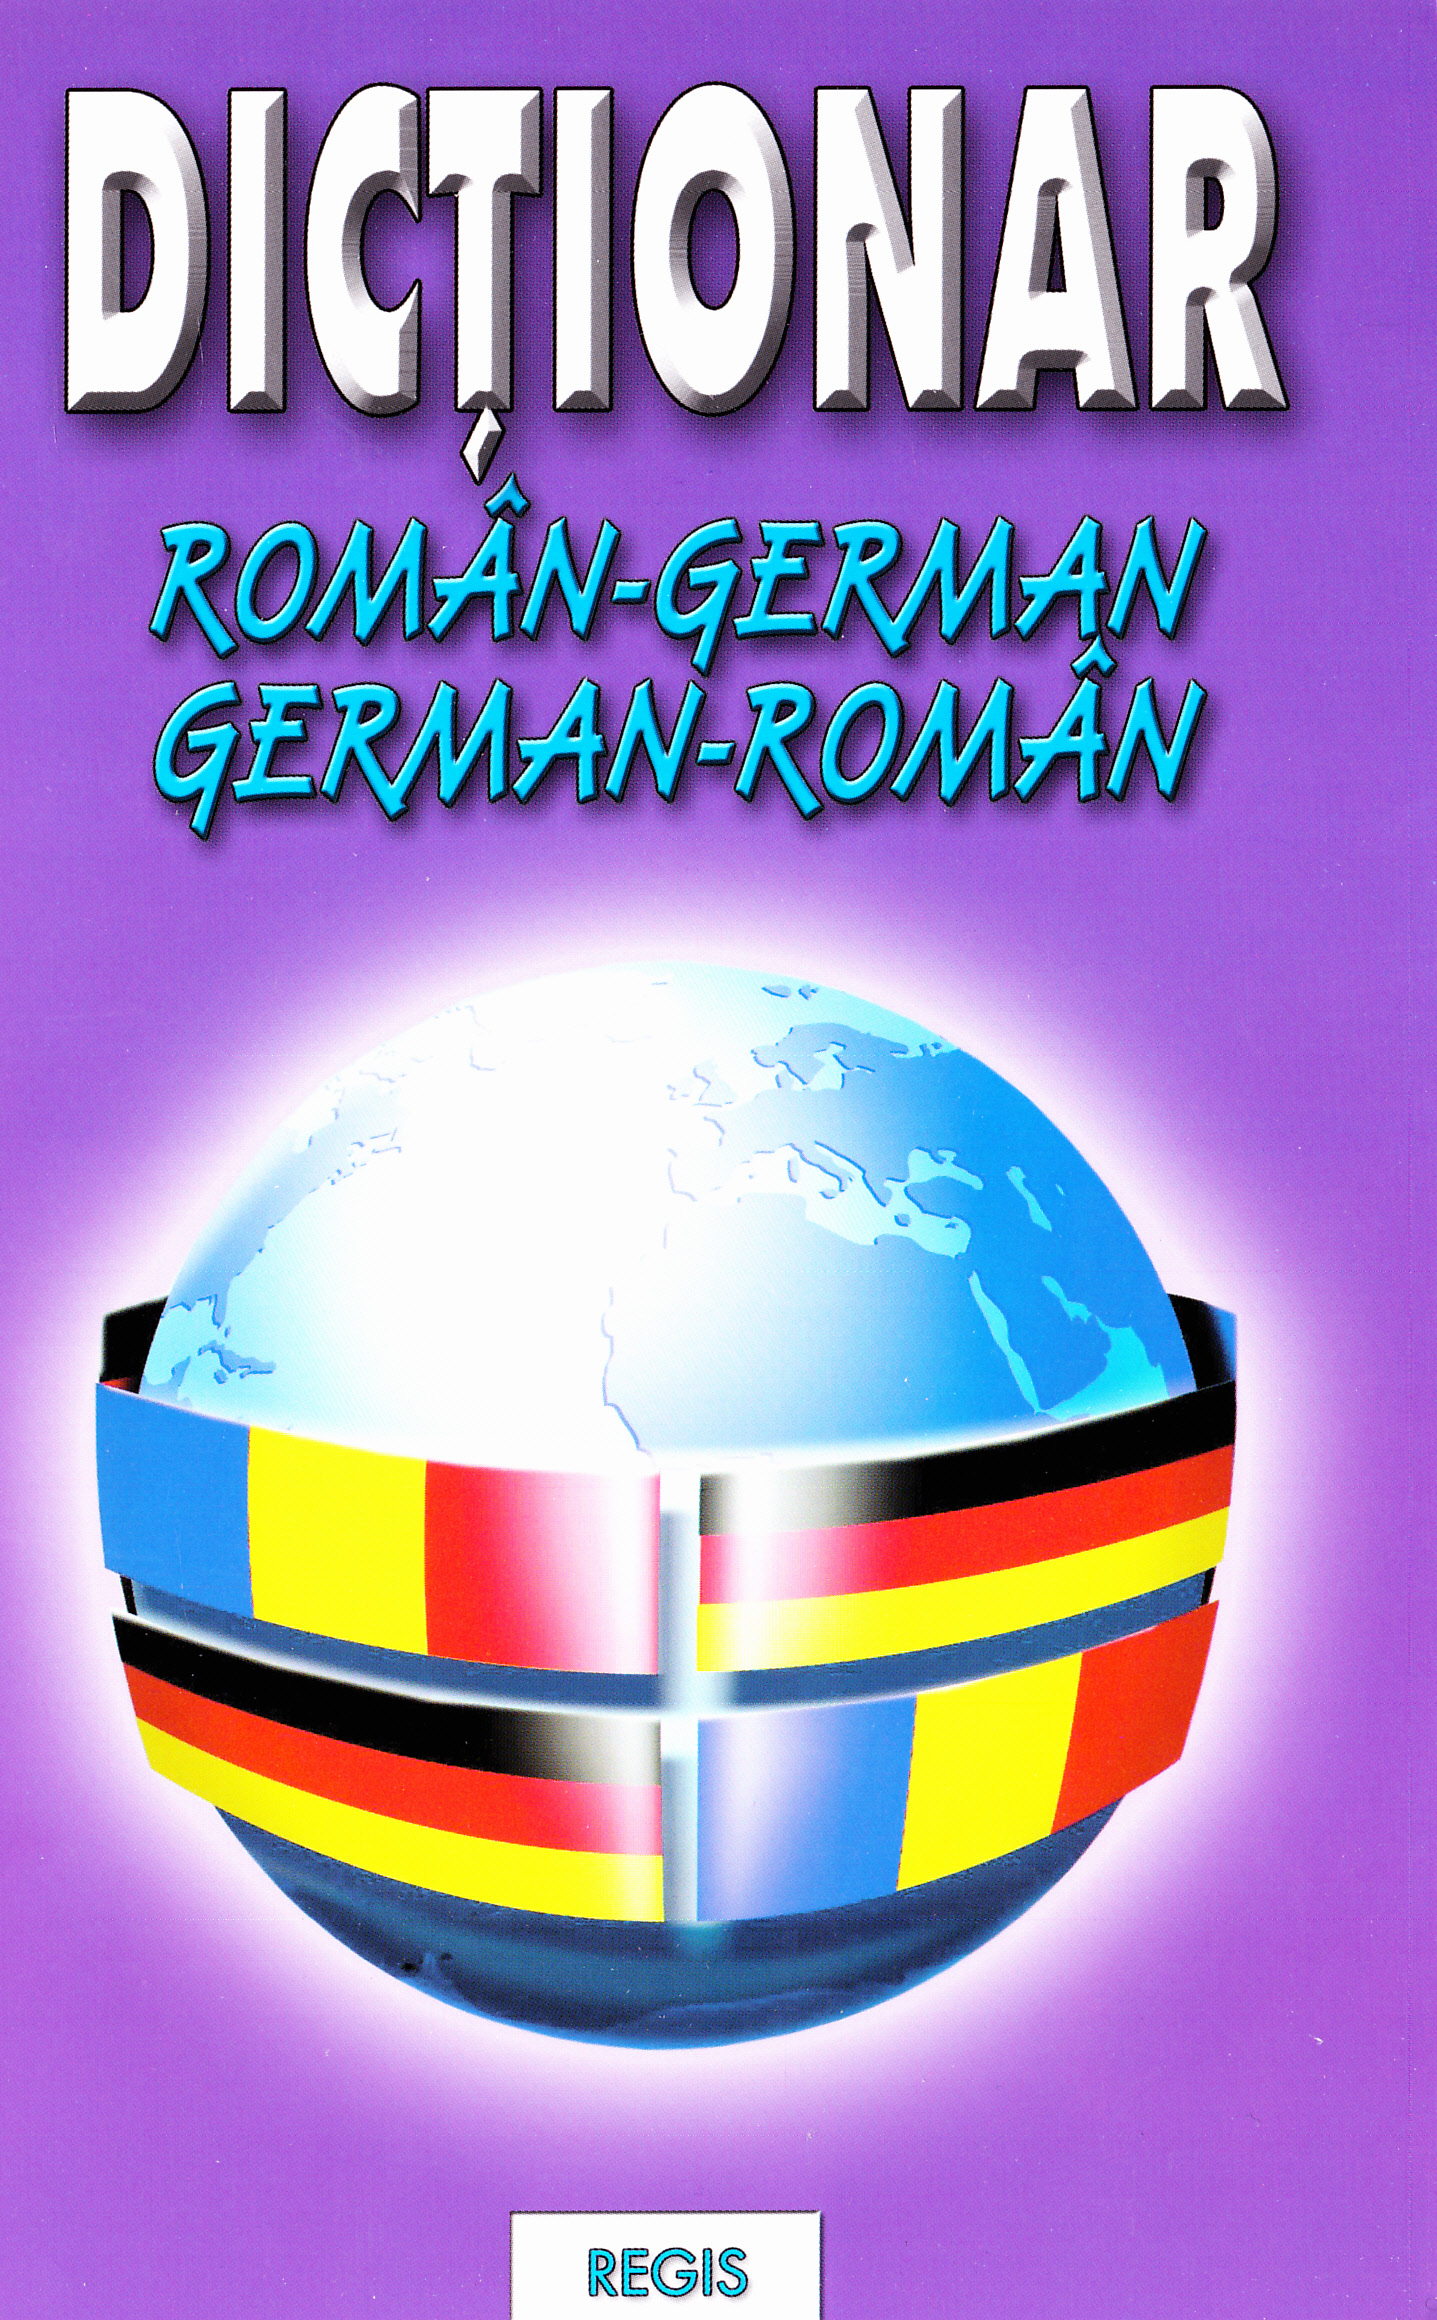 Dictionar roman-german, german-roman - Constatin Teodor